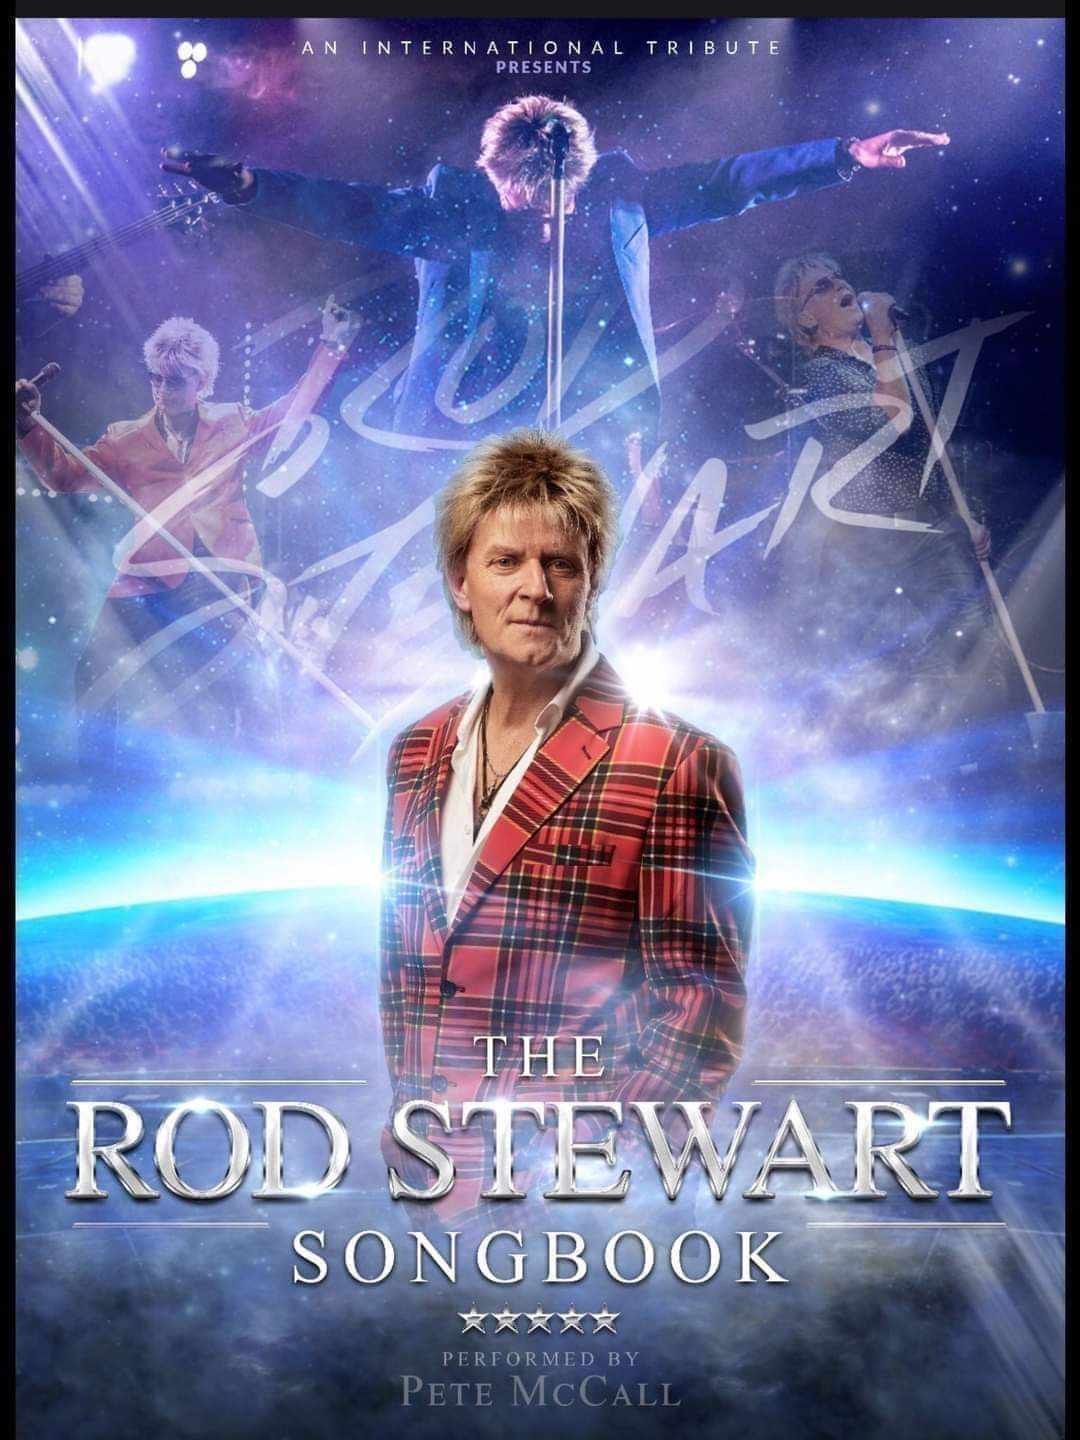 Rod Stewart  on dic. 31, 19:30@Benwick village hall - Compra entradas y obtén información enwhittlesey music nights 